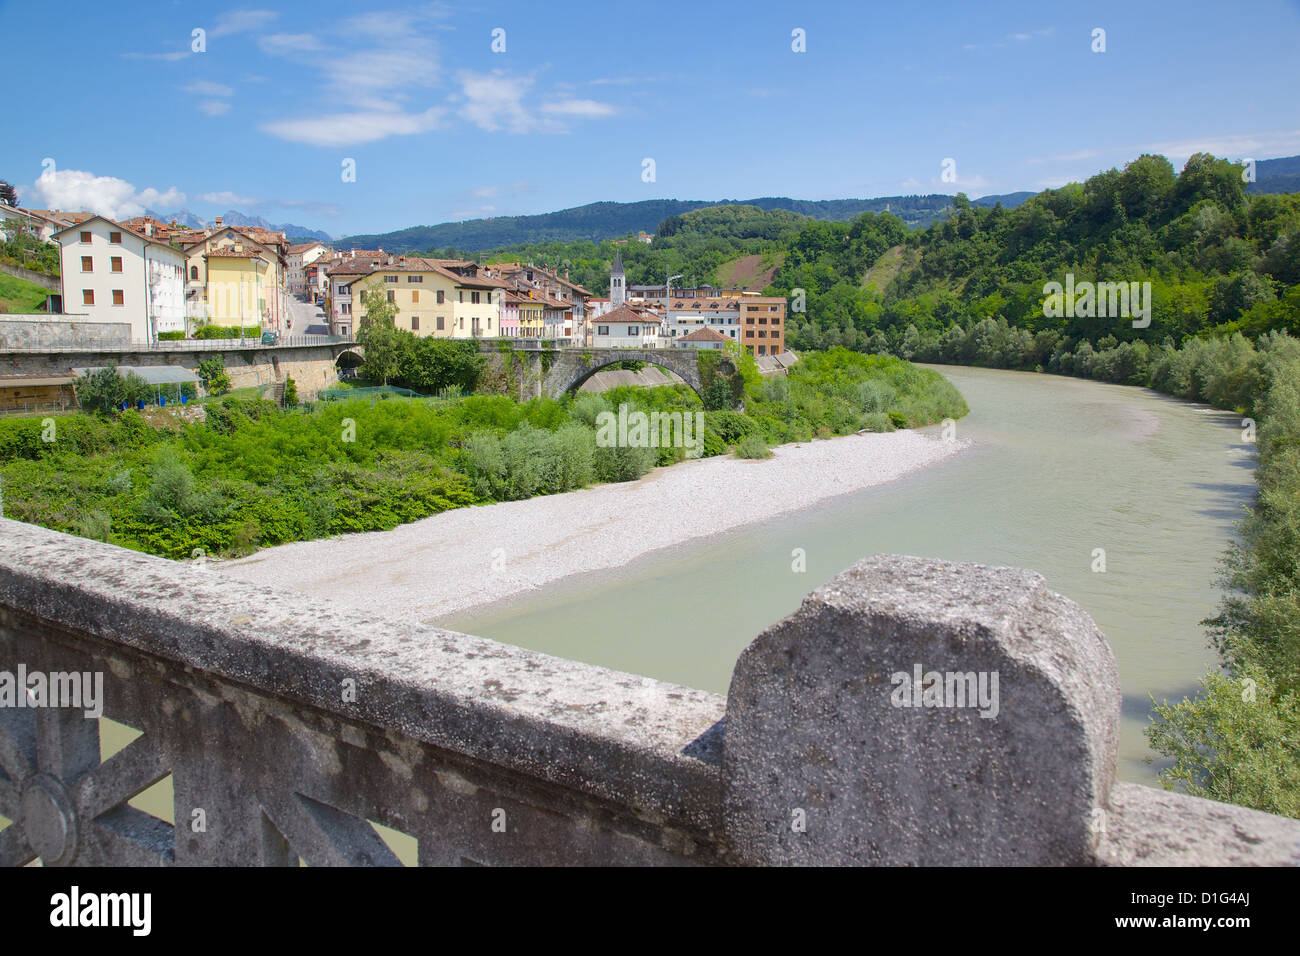 View of town and river, Belluno, Province of Belluno, Veneto, Italy, Europe Stock Photo